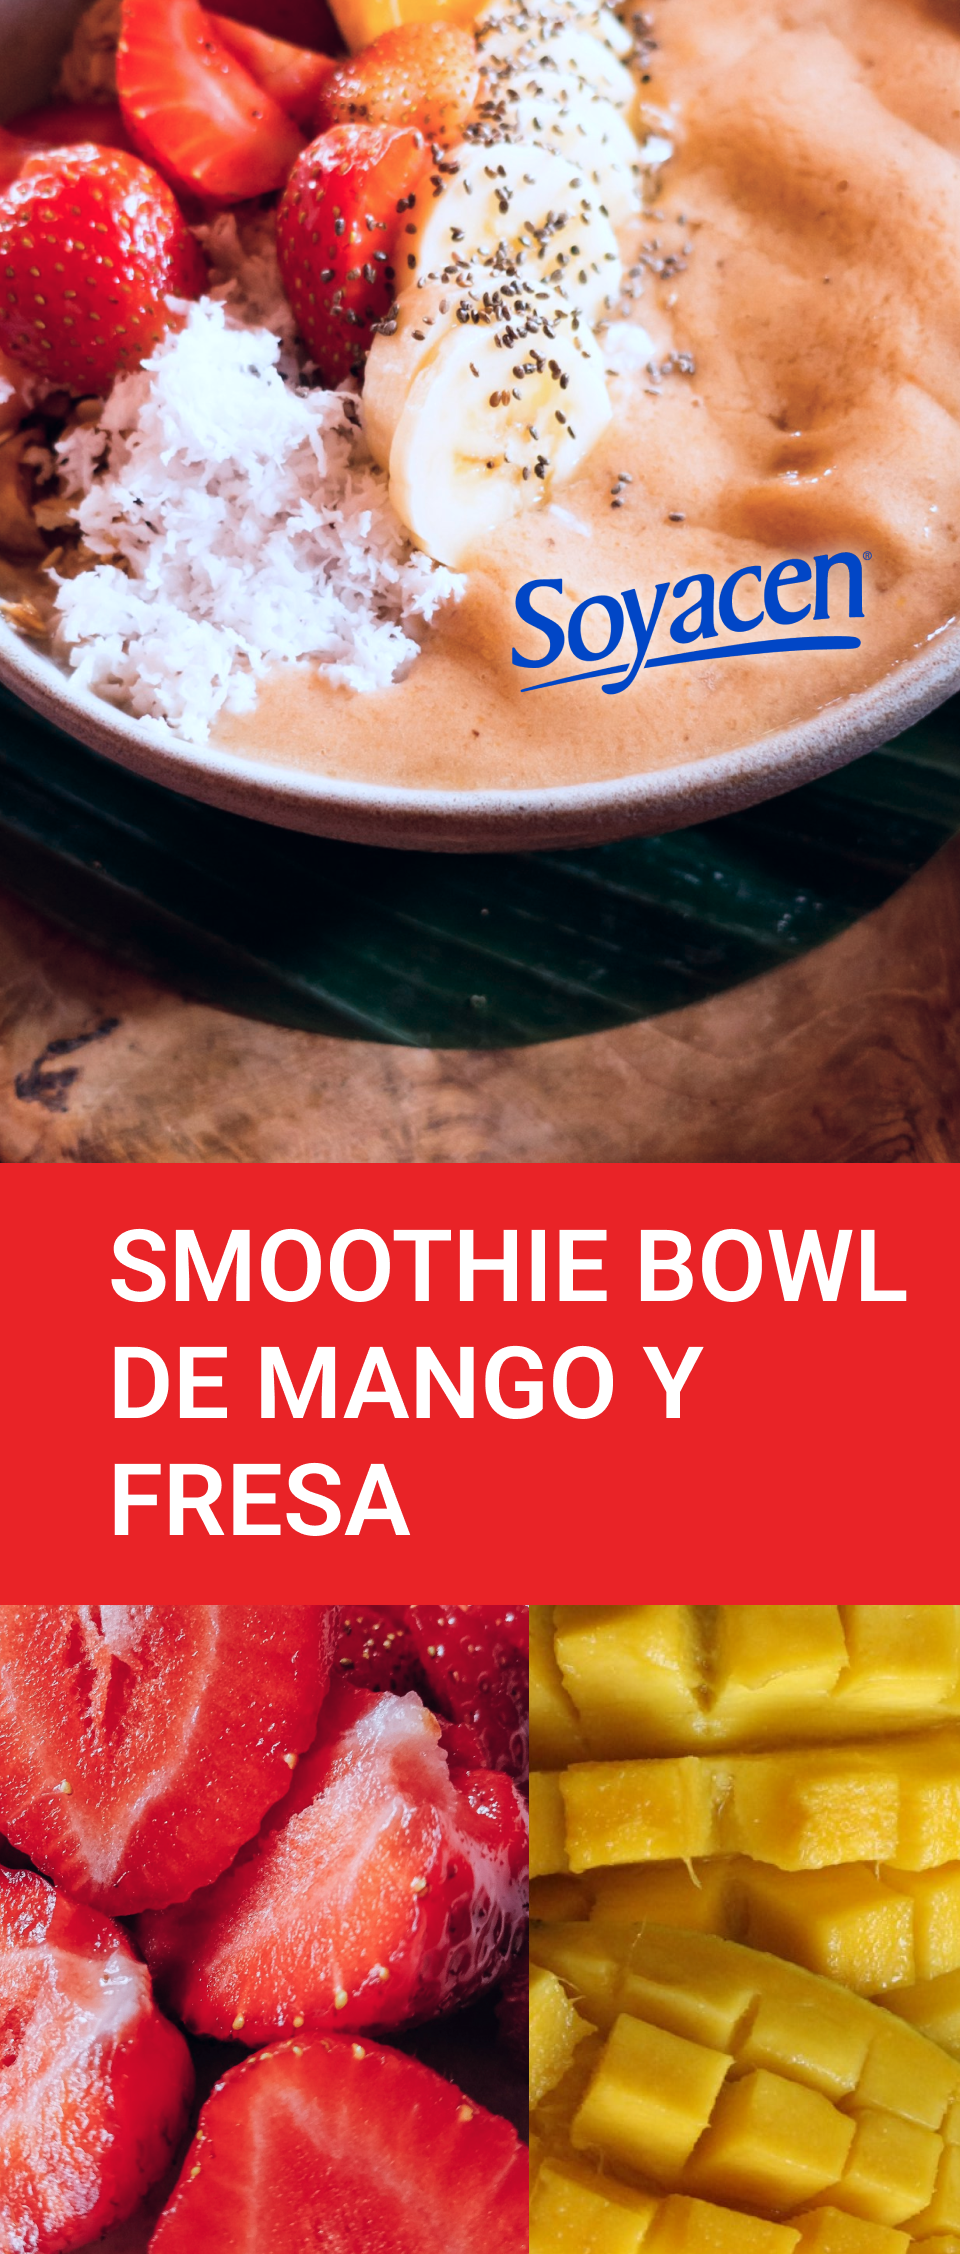 Smoothie bowl de mango y fresa | Blog PRONACEN